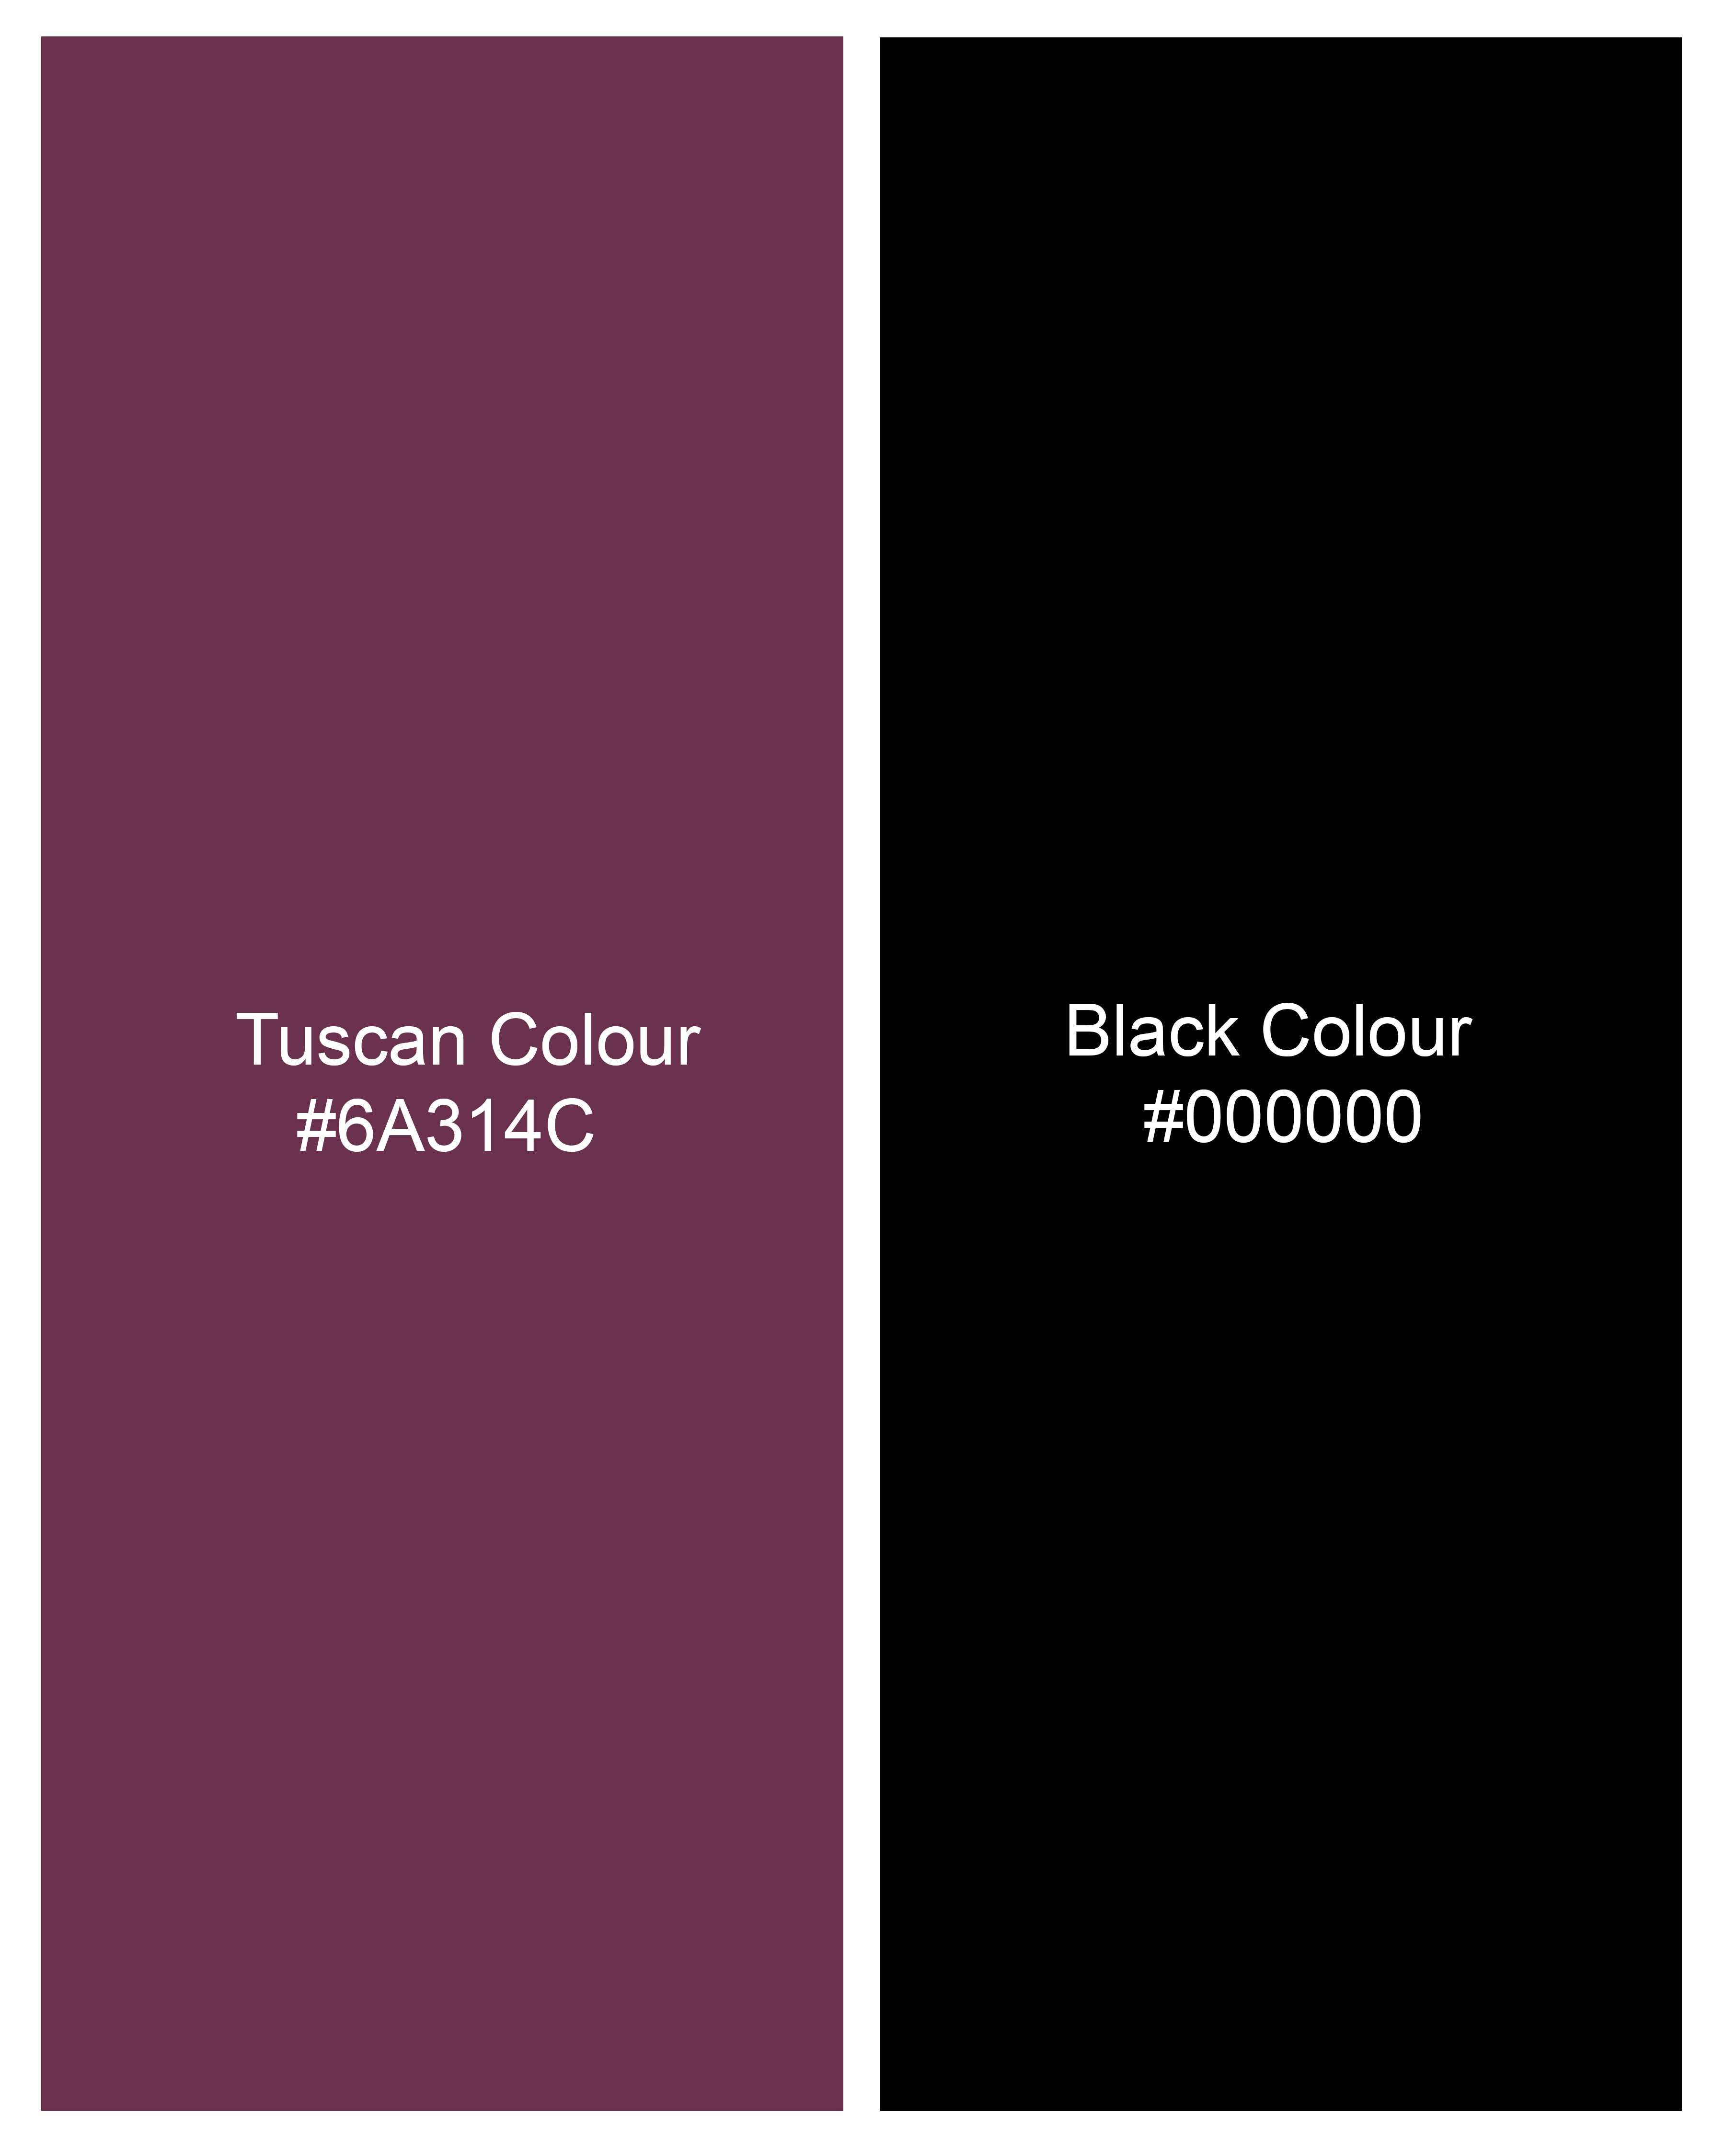 Tuscan Maroon with Black Jacquard Textured Premium Giza Cotton Shirt 9650-CA-BLK-38,9650-CA-BLK-H-38,9650-CA-BLK-39,9650-CA-BLK-H-39,9650-CA-BLK-40,9650-CA-BLK-H-40,9650-CA-BLK-42,9650-CA-BLK-H-42,9650-CA-BLK-44,9650-CA-BLK-H-44,9650-CA-BLK-46,9650-CA-BLK-H-46,9650-CA-BLK-48,9650-CA-BLK-H-48,9650-CA-BLK-50,9650-CA-BLK-H-50,9650-CA-BLK-52,9650-CA-BLK-H-52